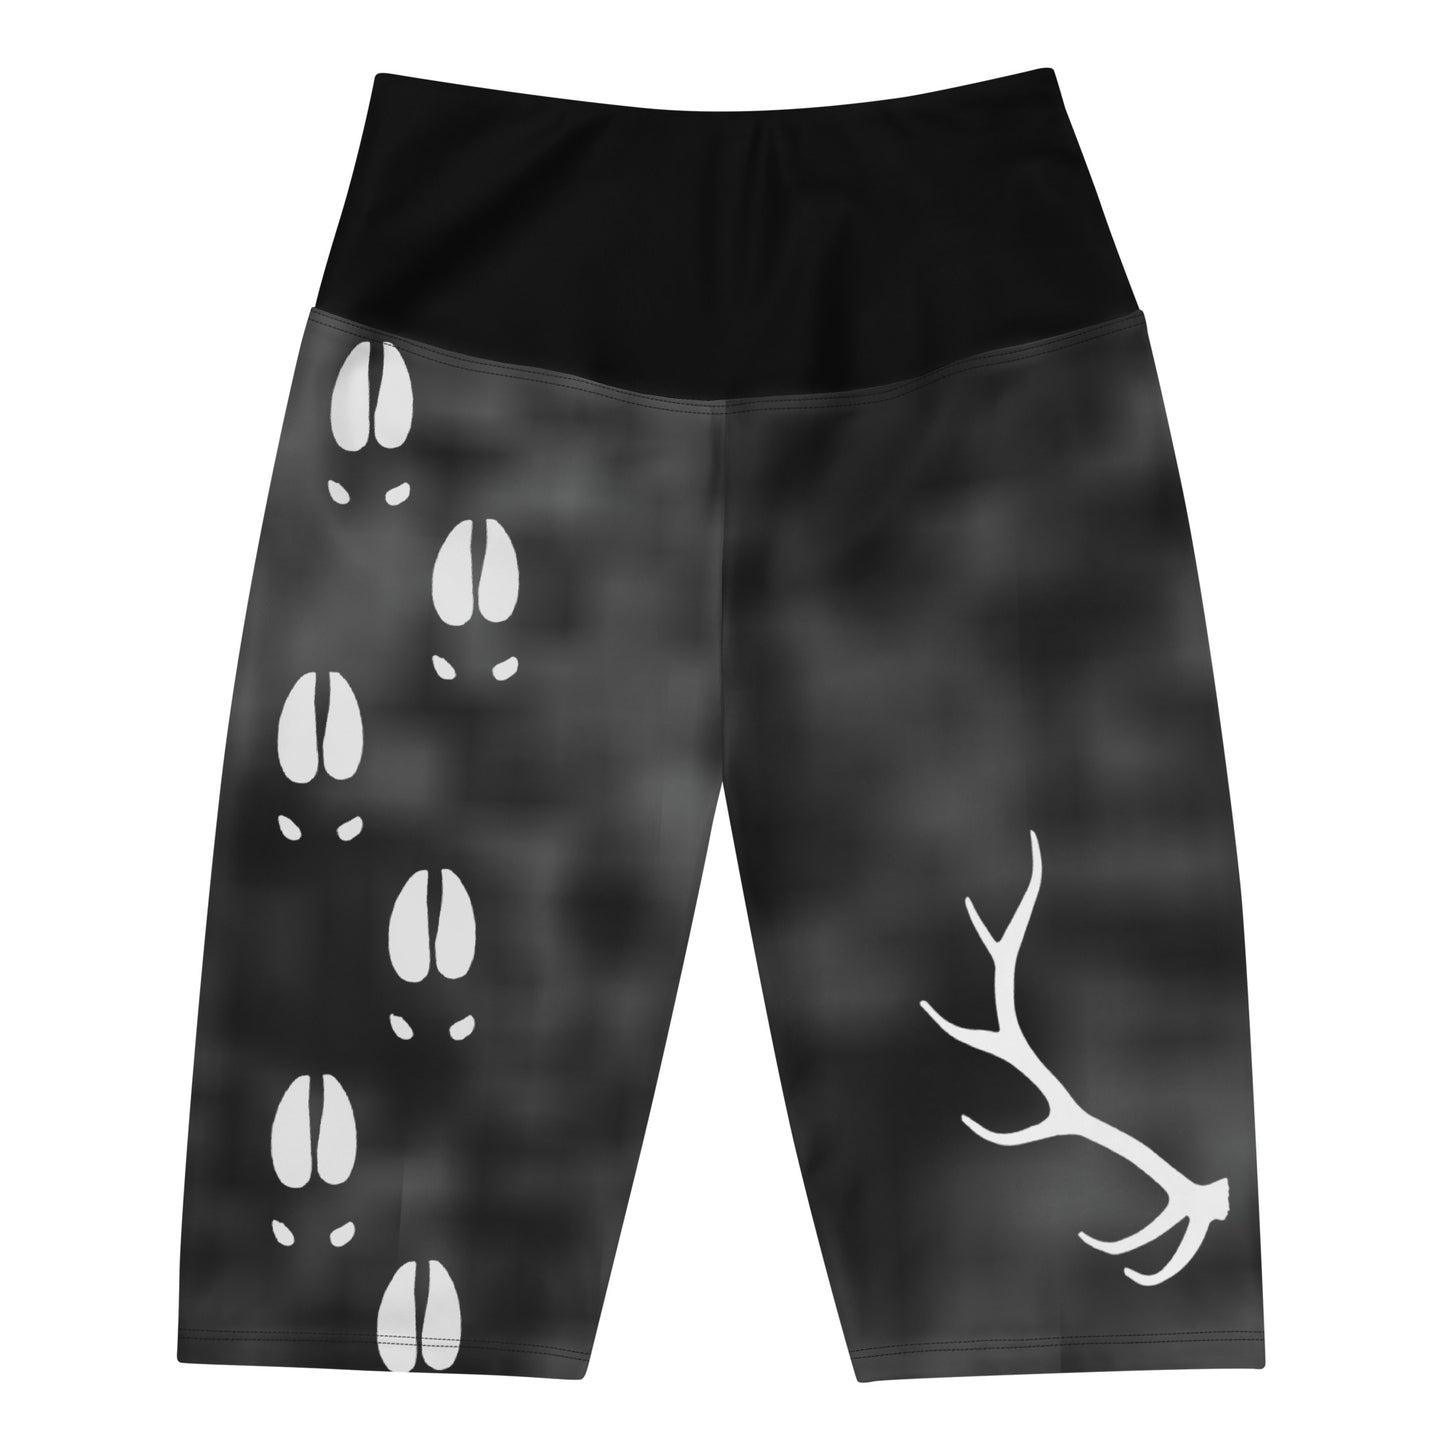 Elk Totem - Long Shorts